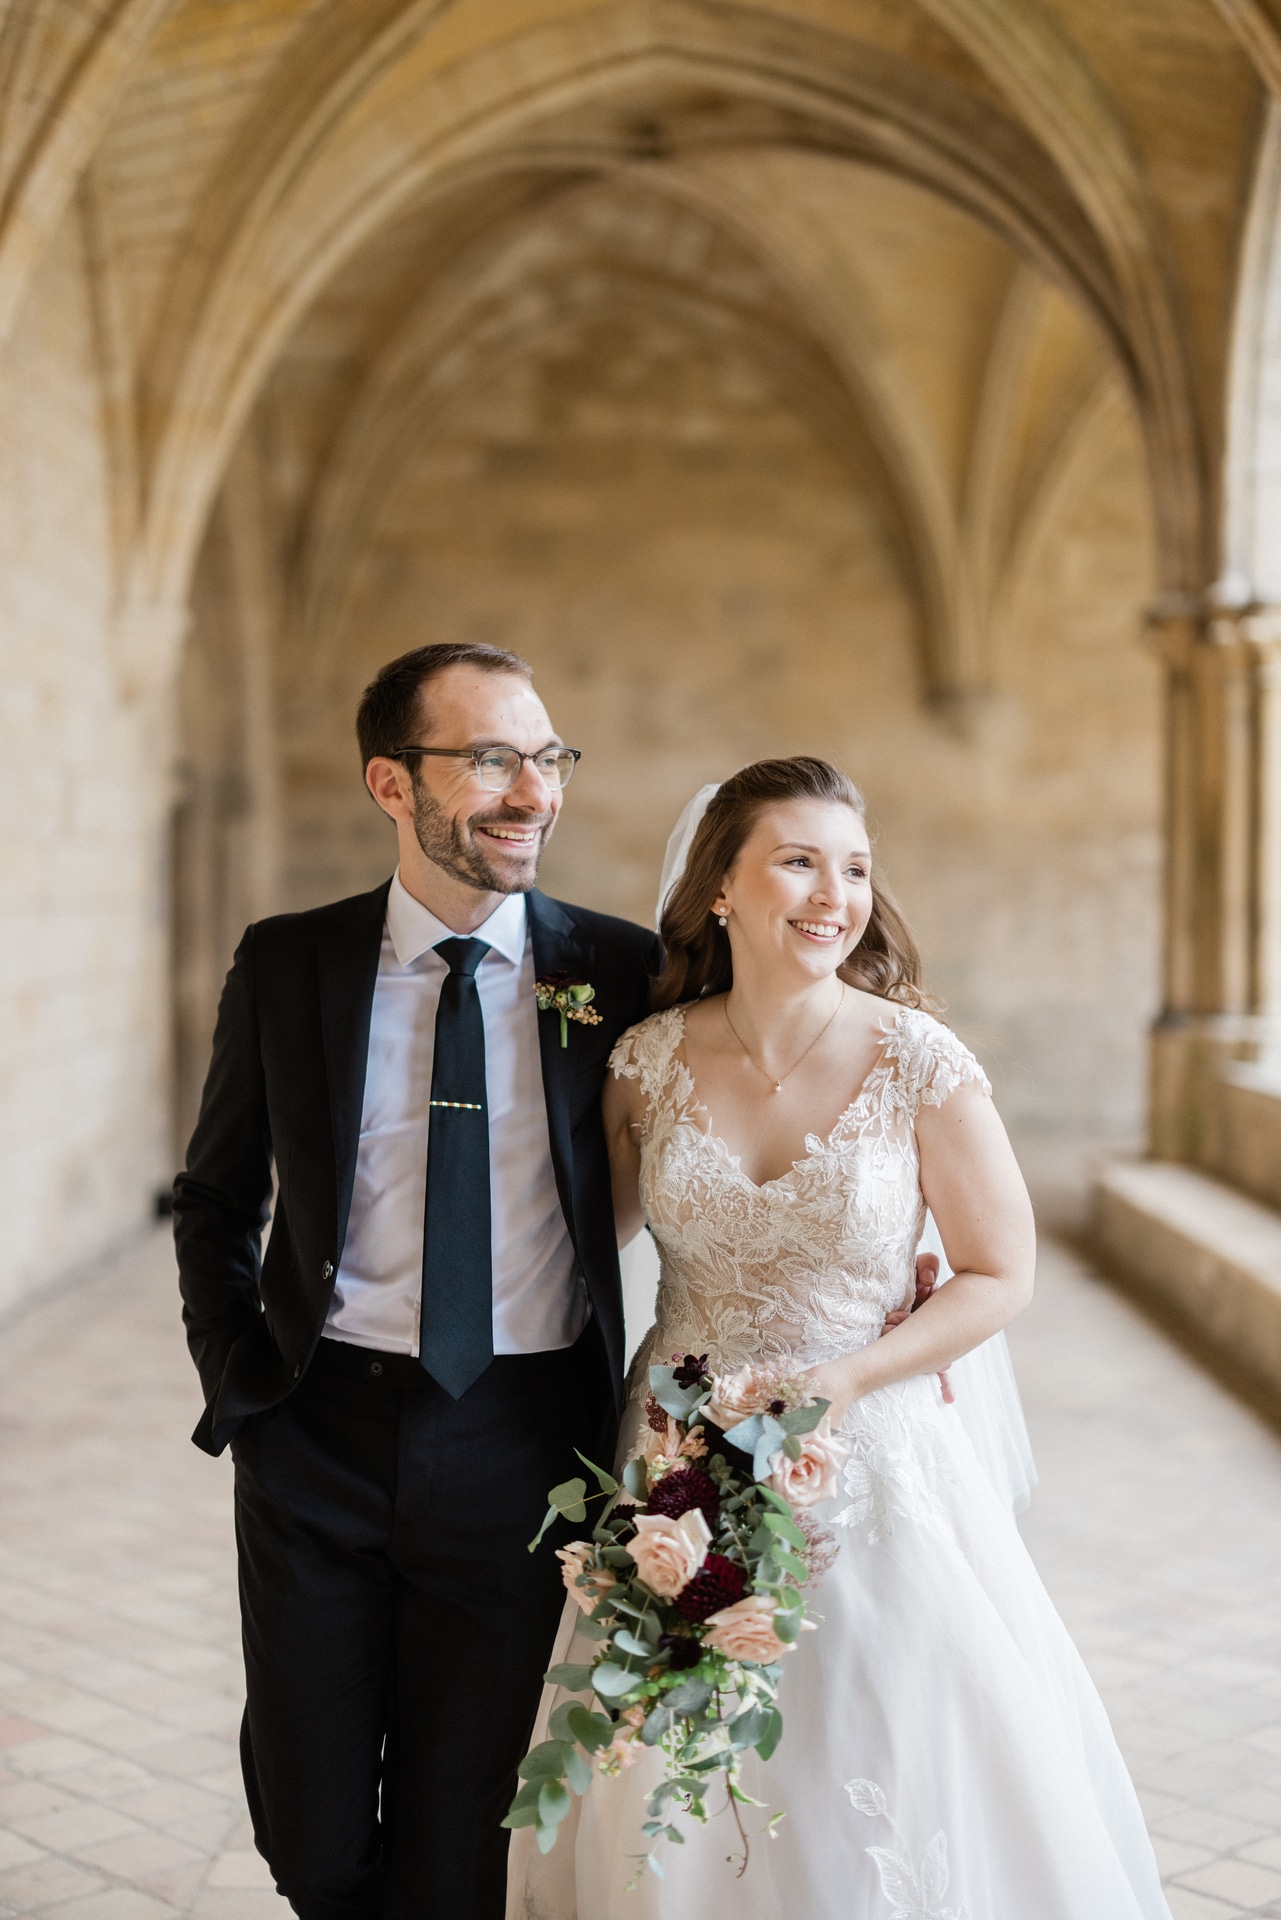 Wedding at the Abbaye de Royaumont Oise France